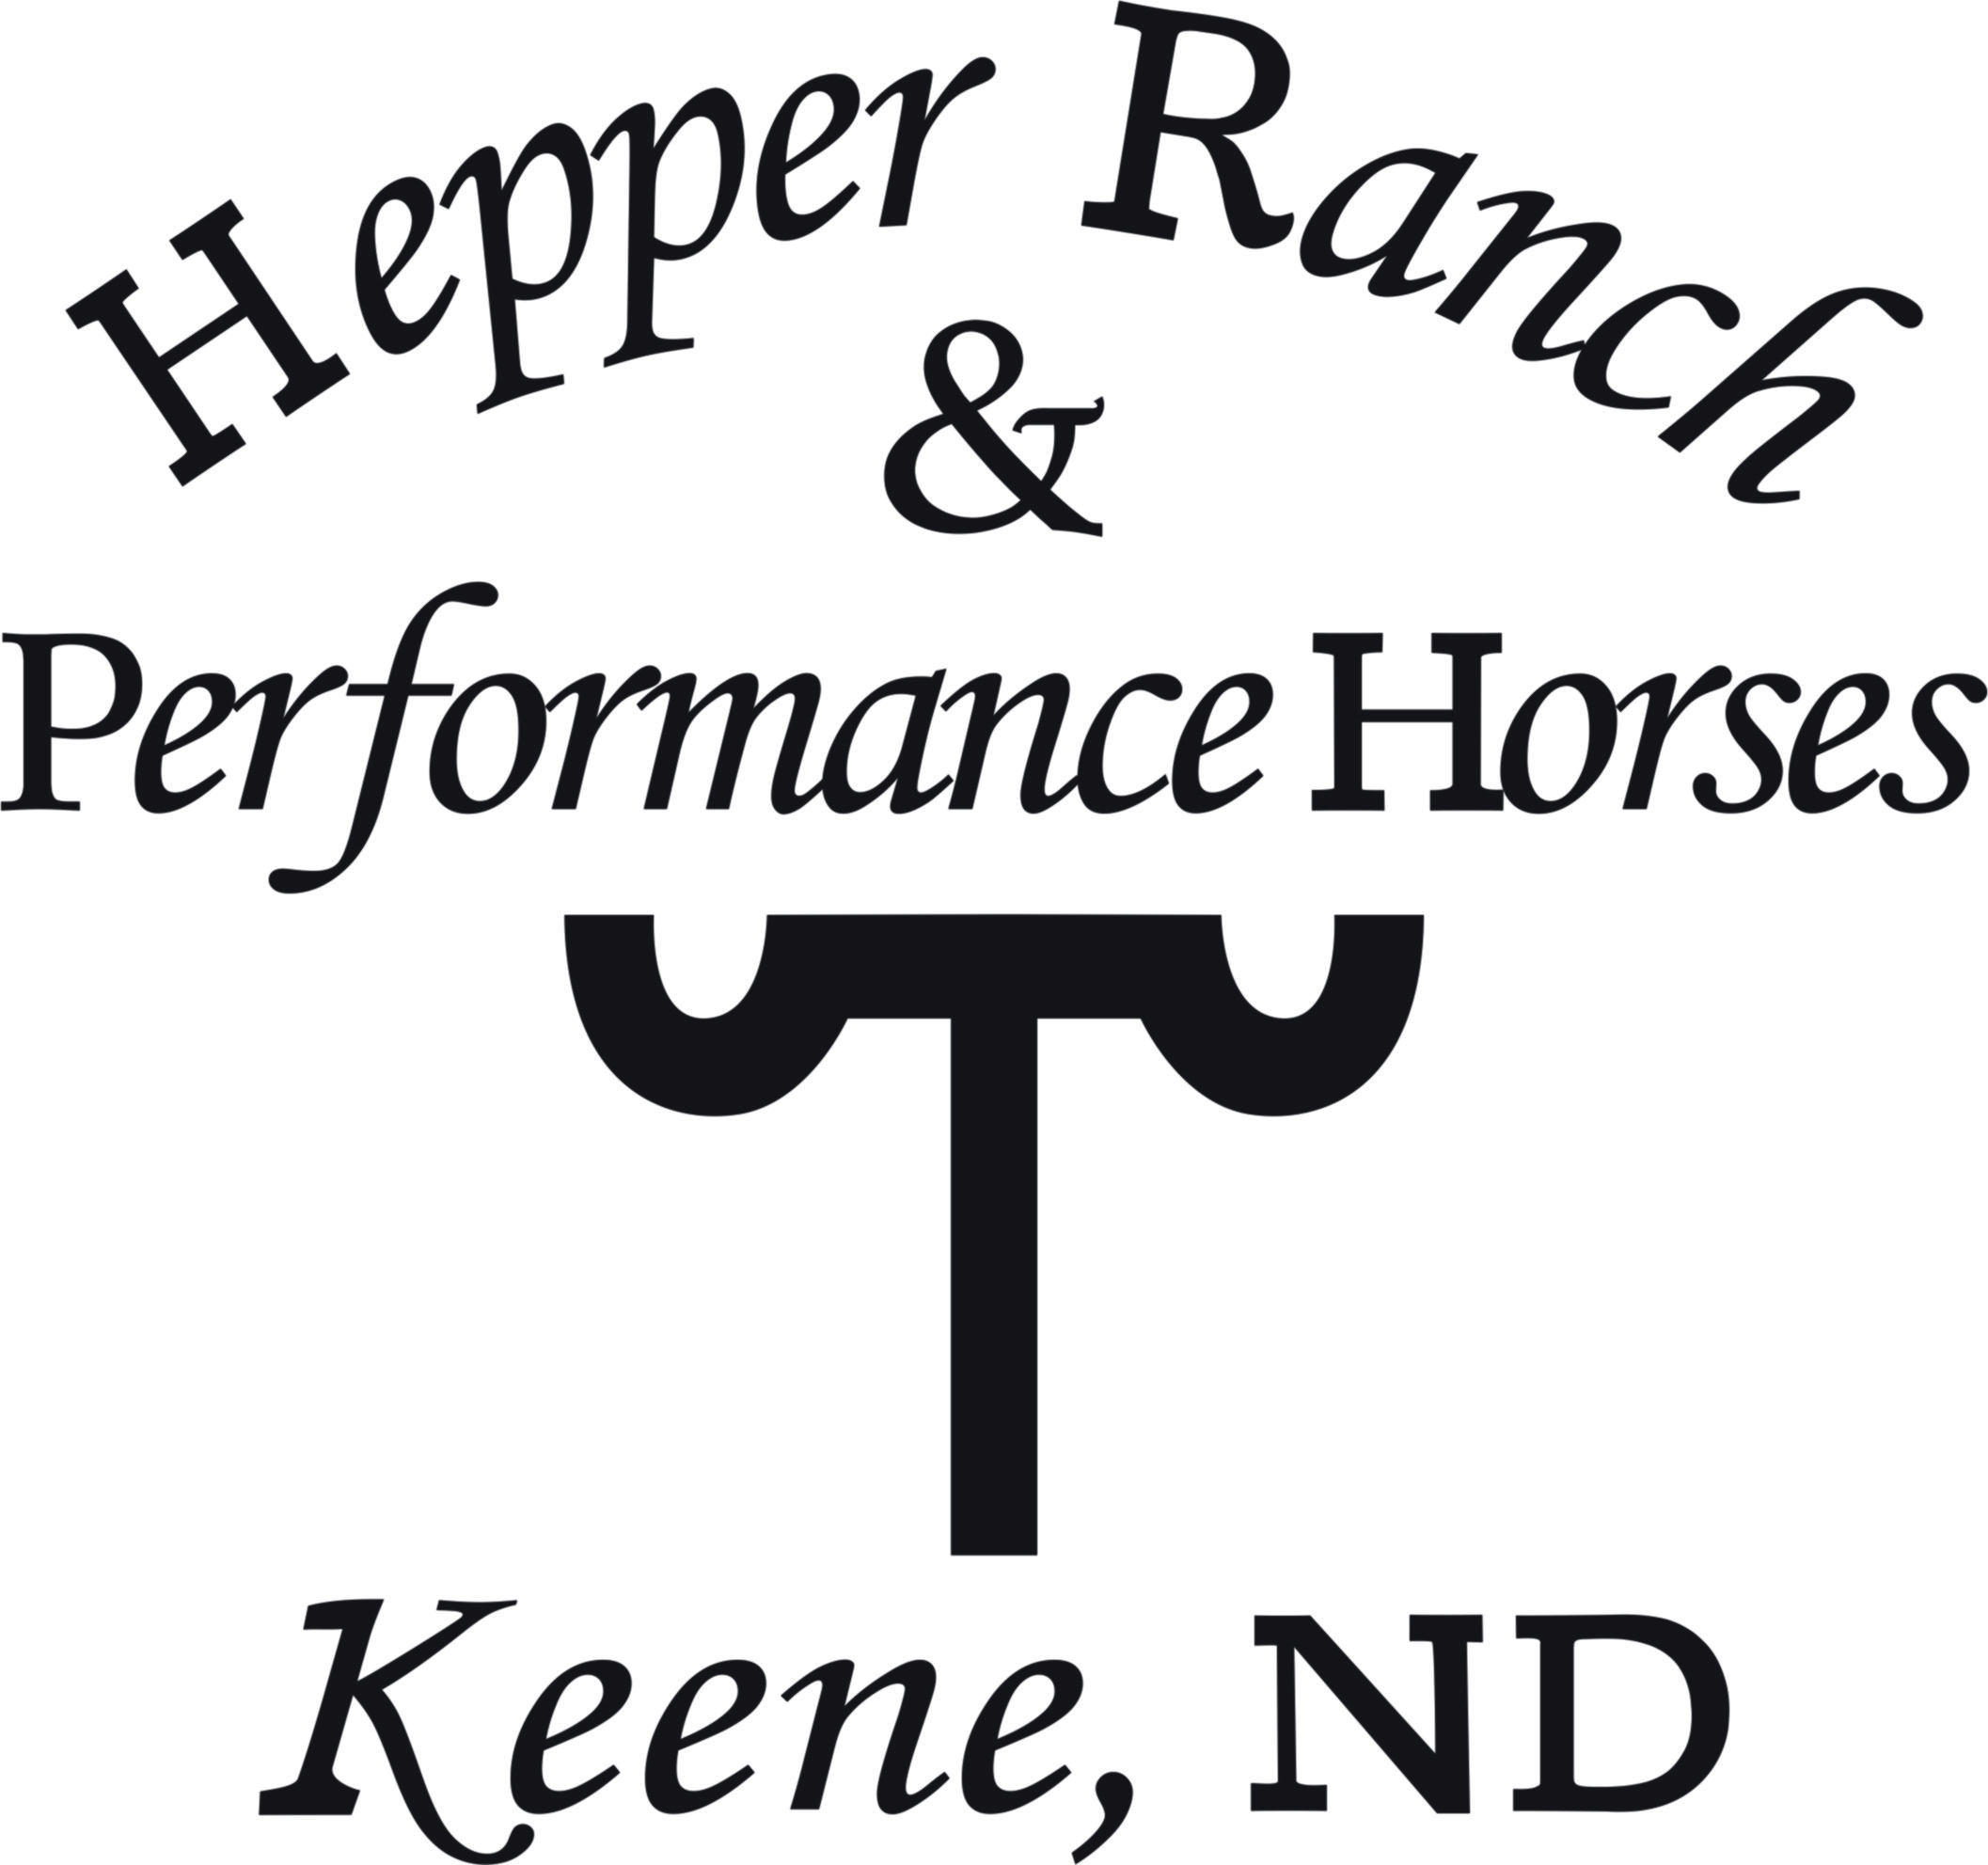 Hepper Ranch & Performance Horses - Jeff & Eva Hepper